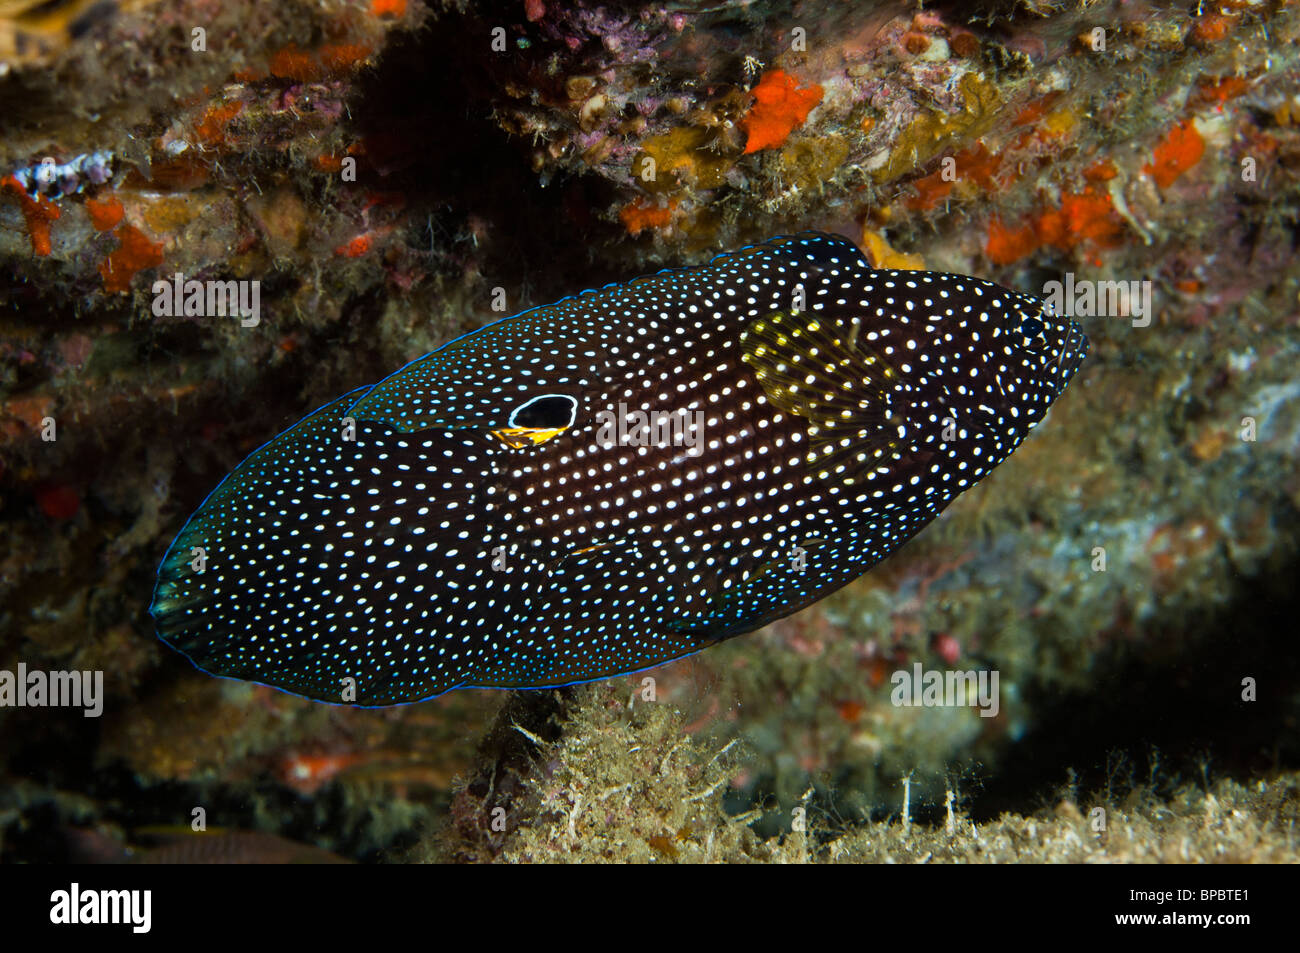 Comet fish, Pulau Weh, Sumatra, Indonesia. Stock Photo